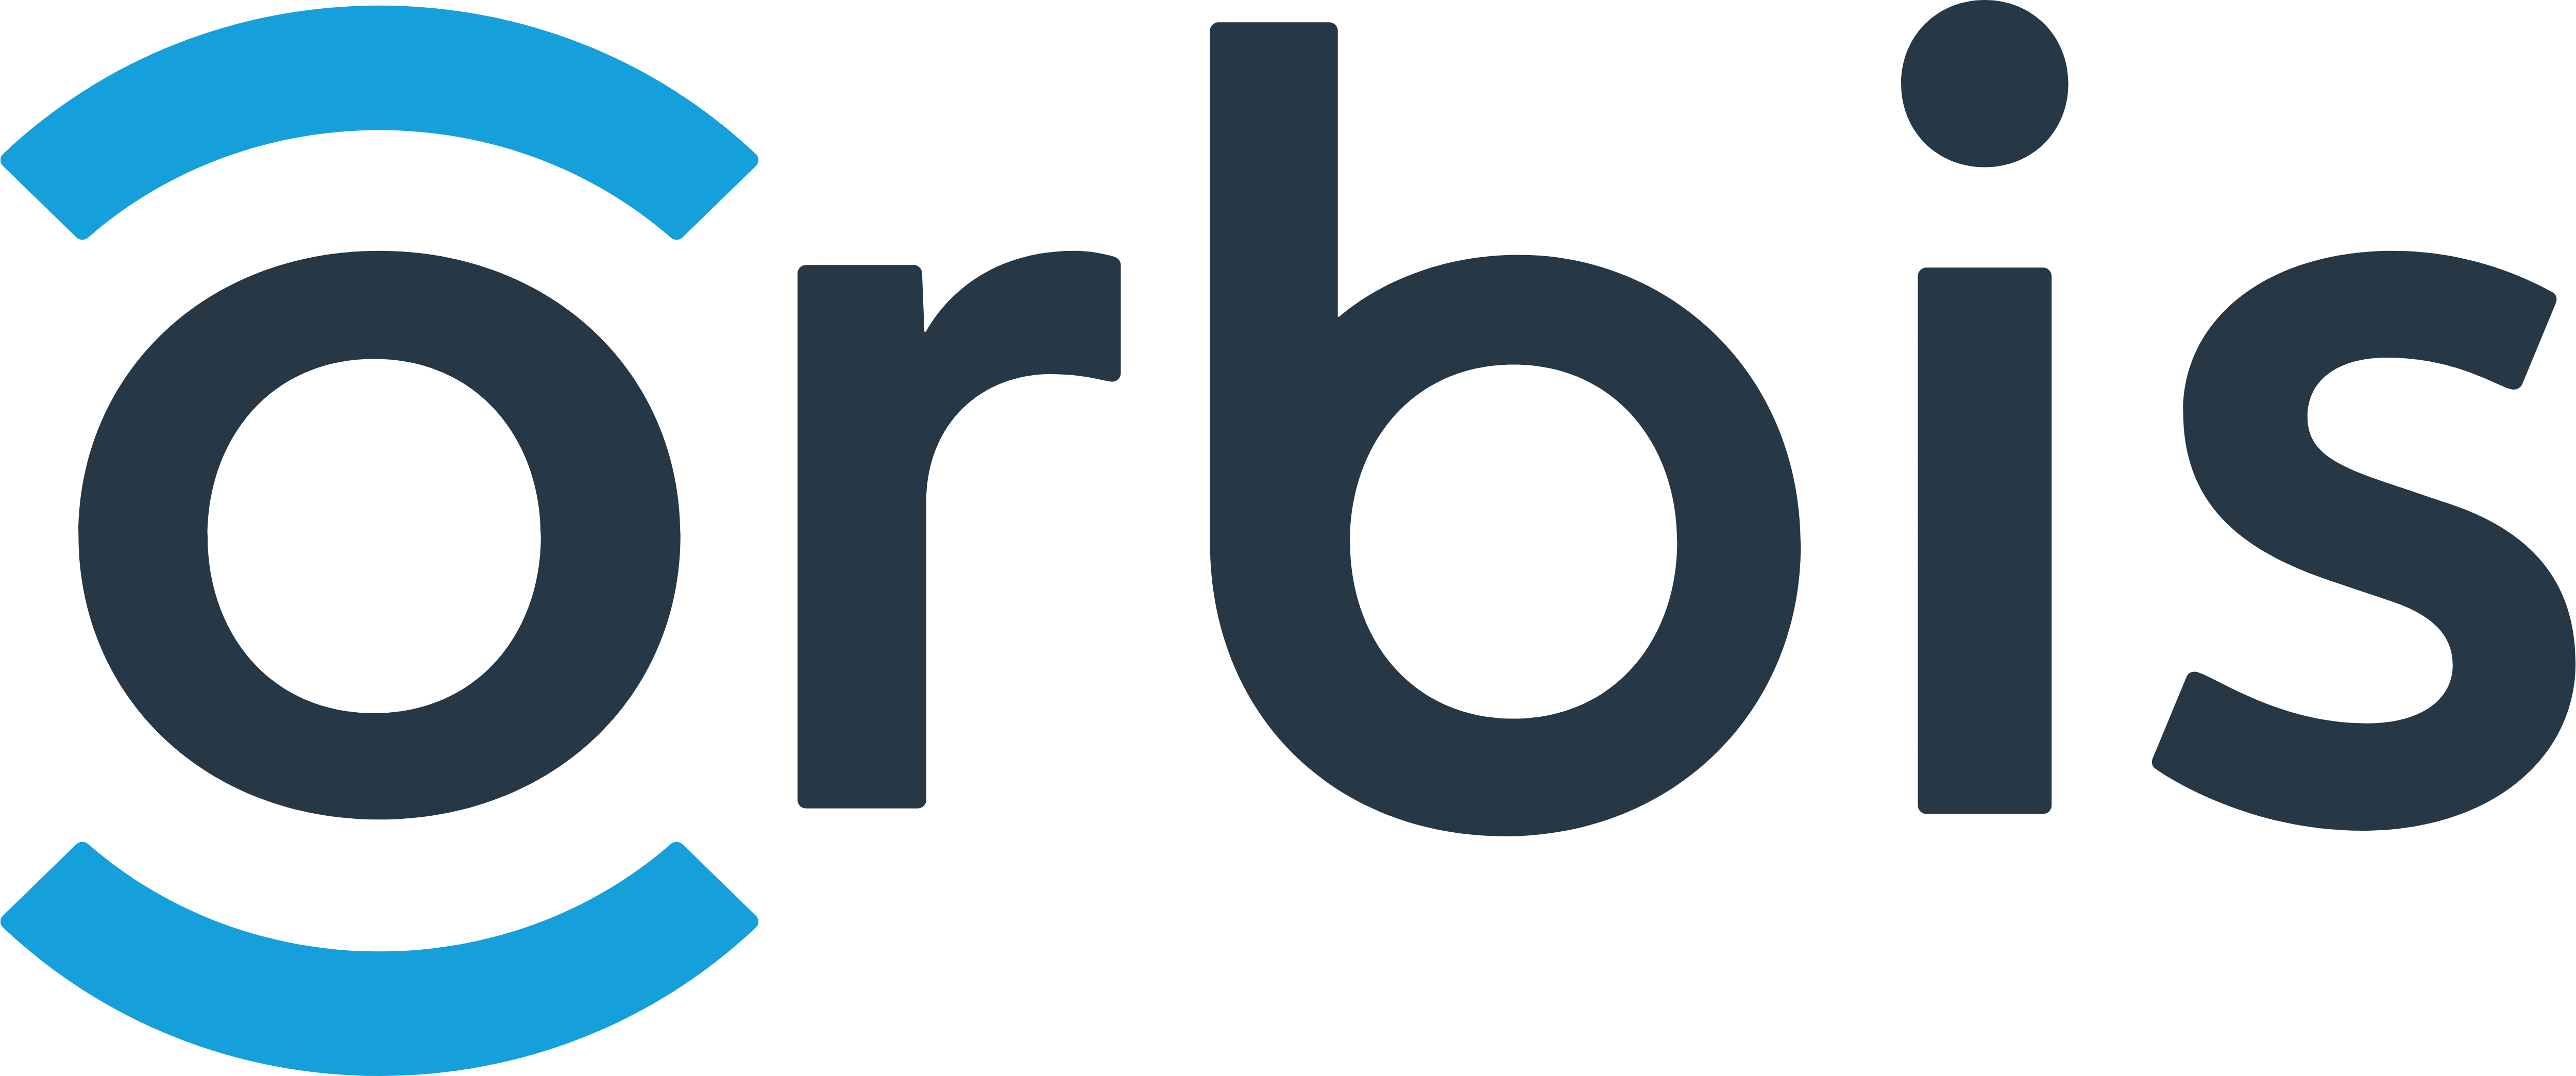 orbis-logos-download